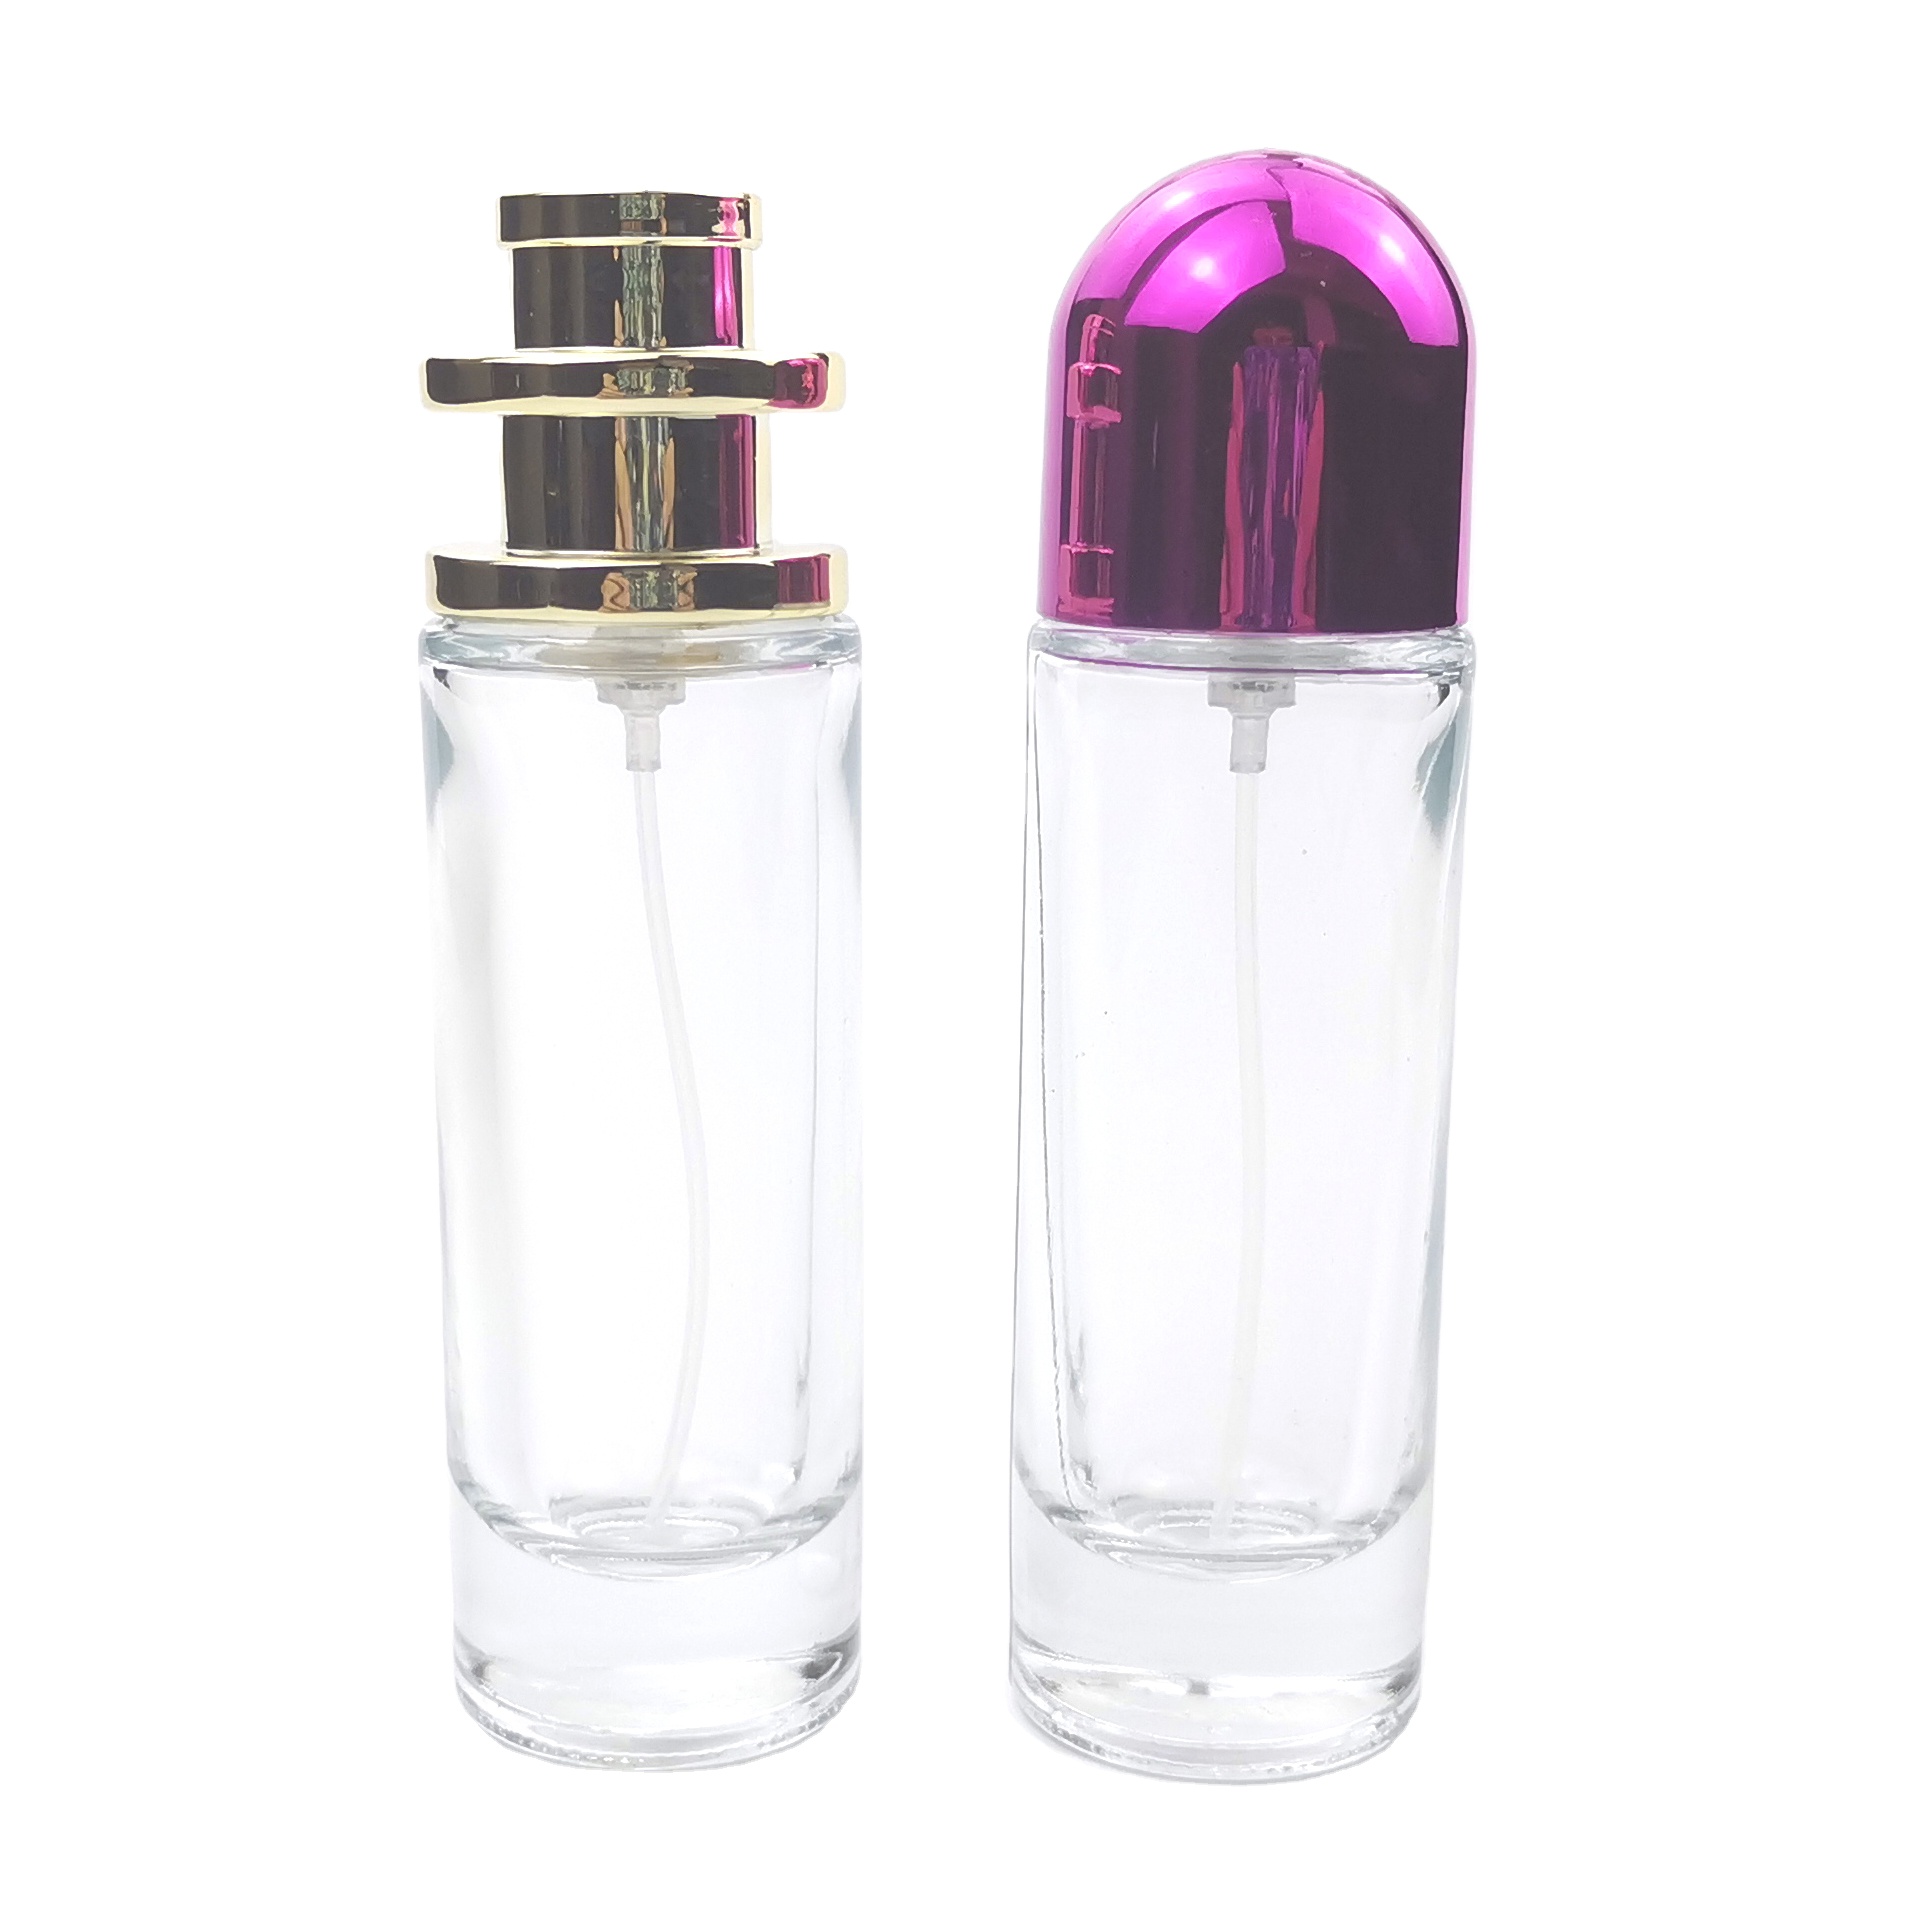 Luxury fancy design empty clear recycled glass 30ml spray pump perfume